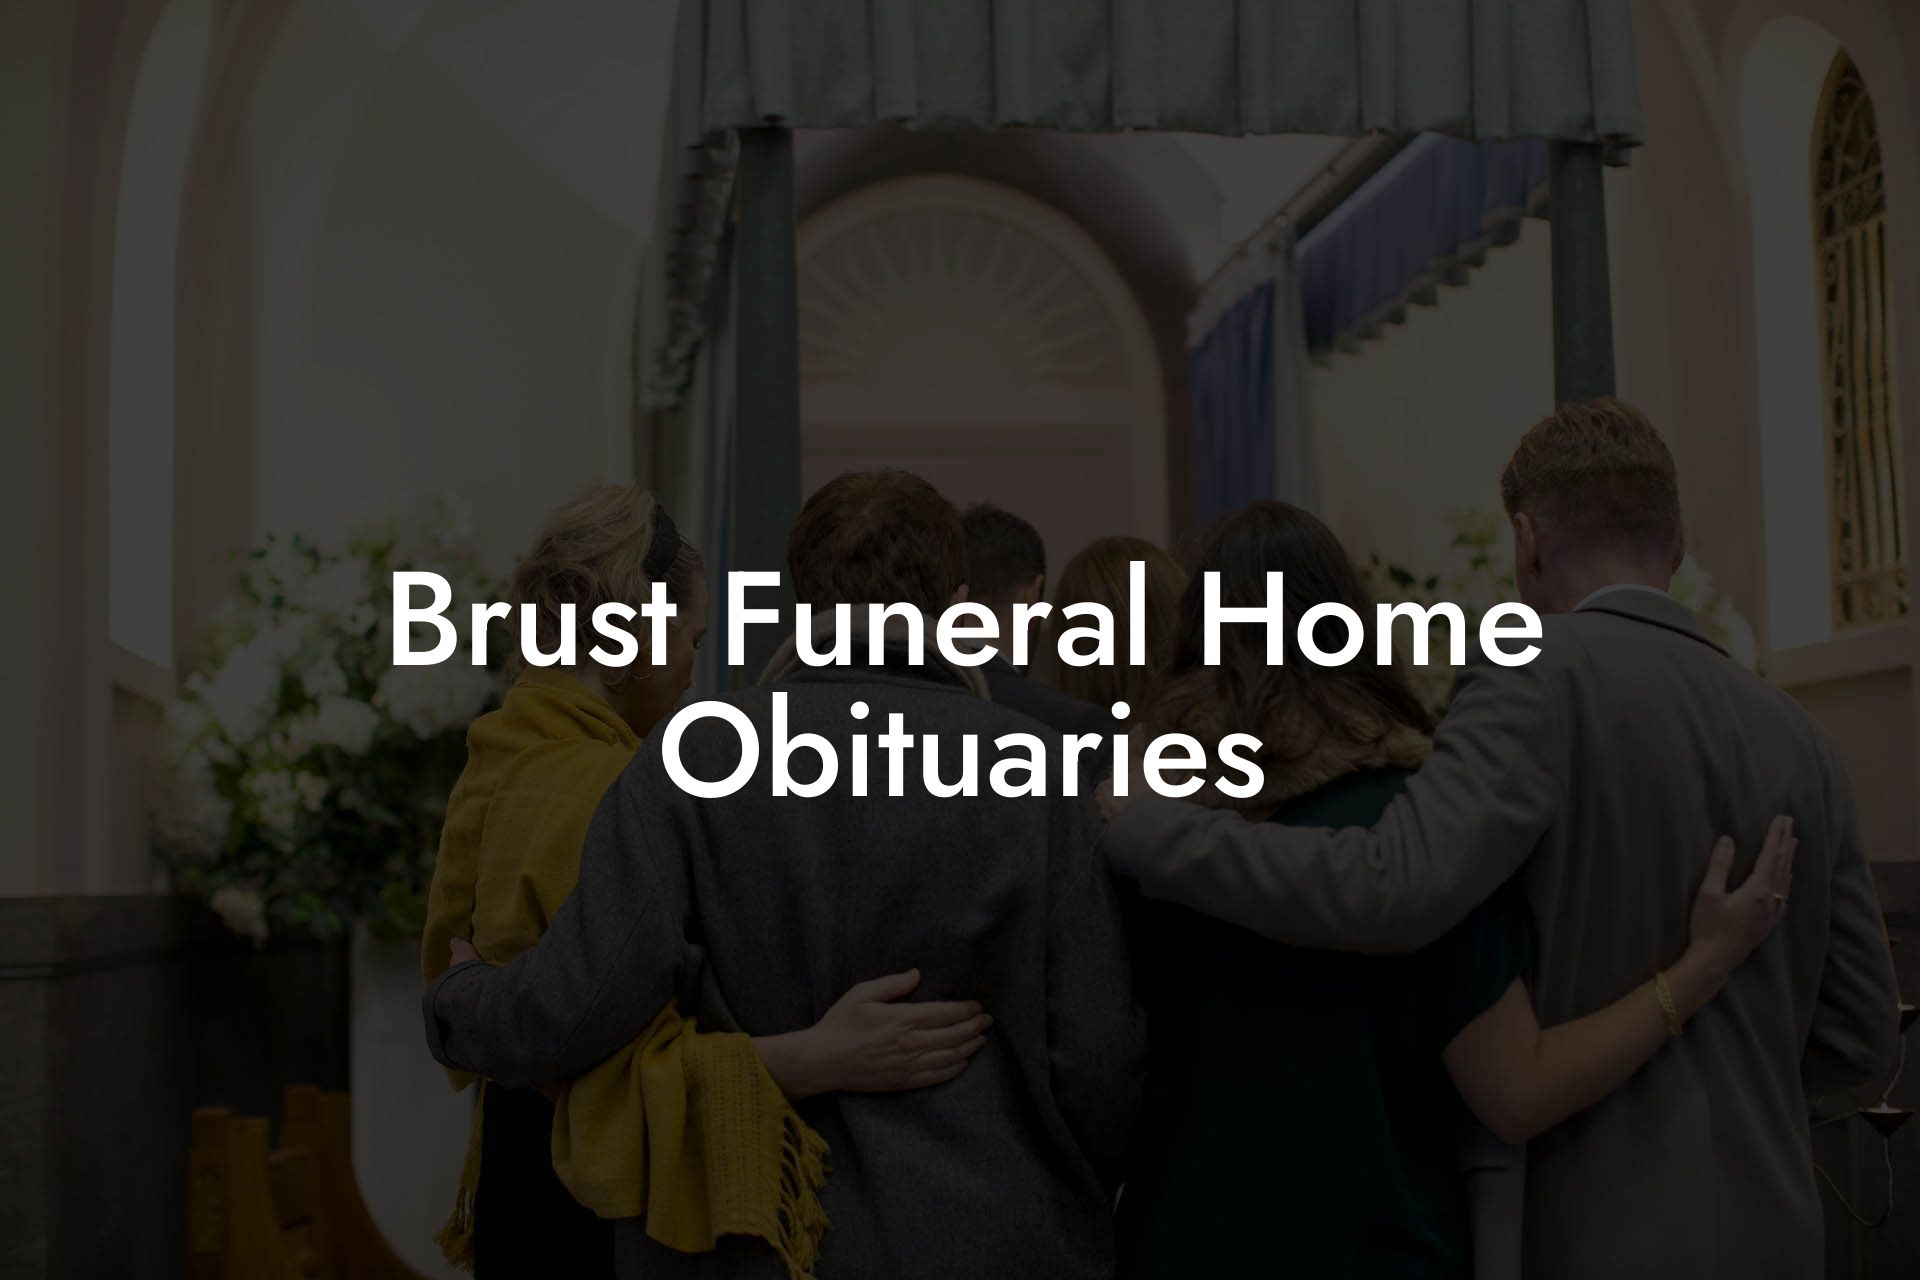 Brust Funeral Home Obituaries